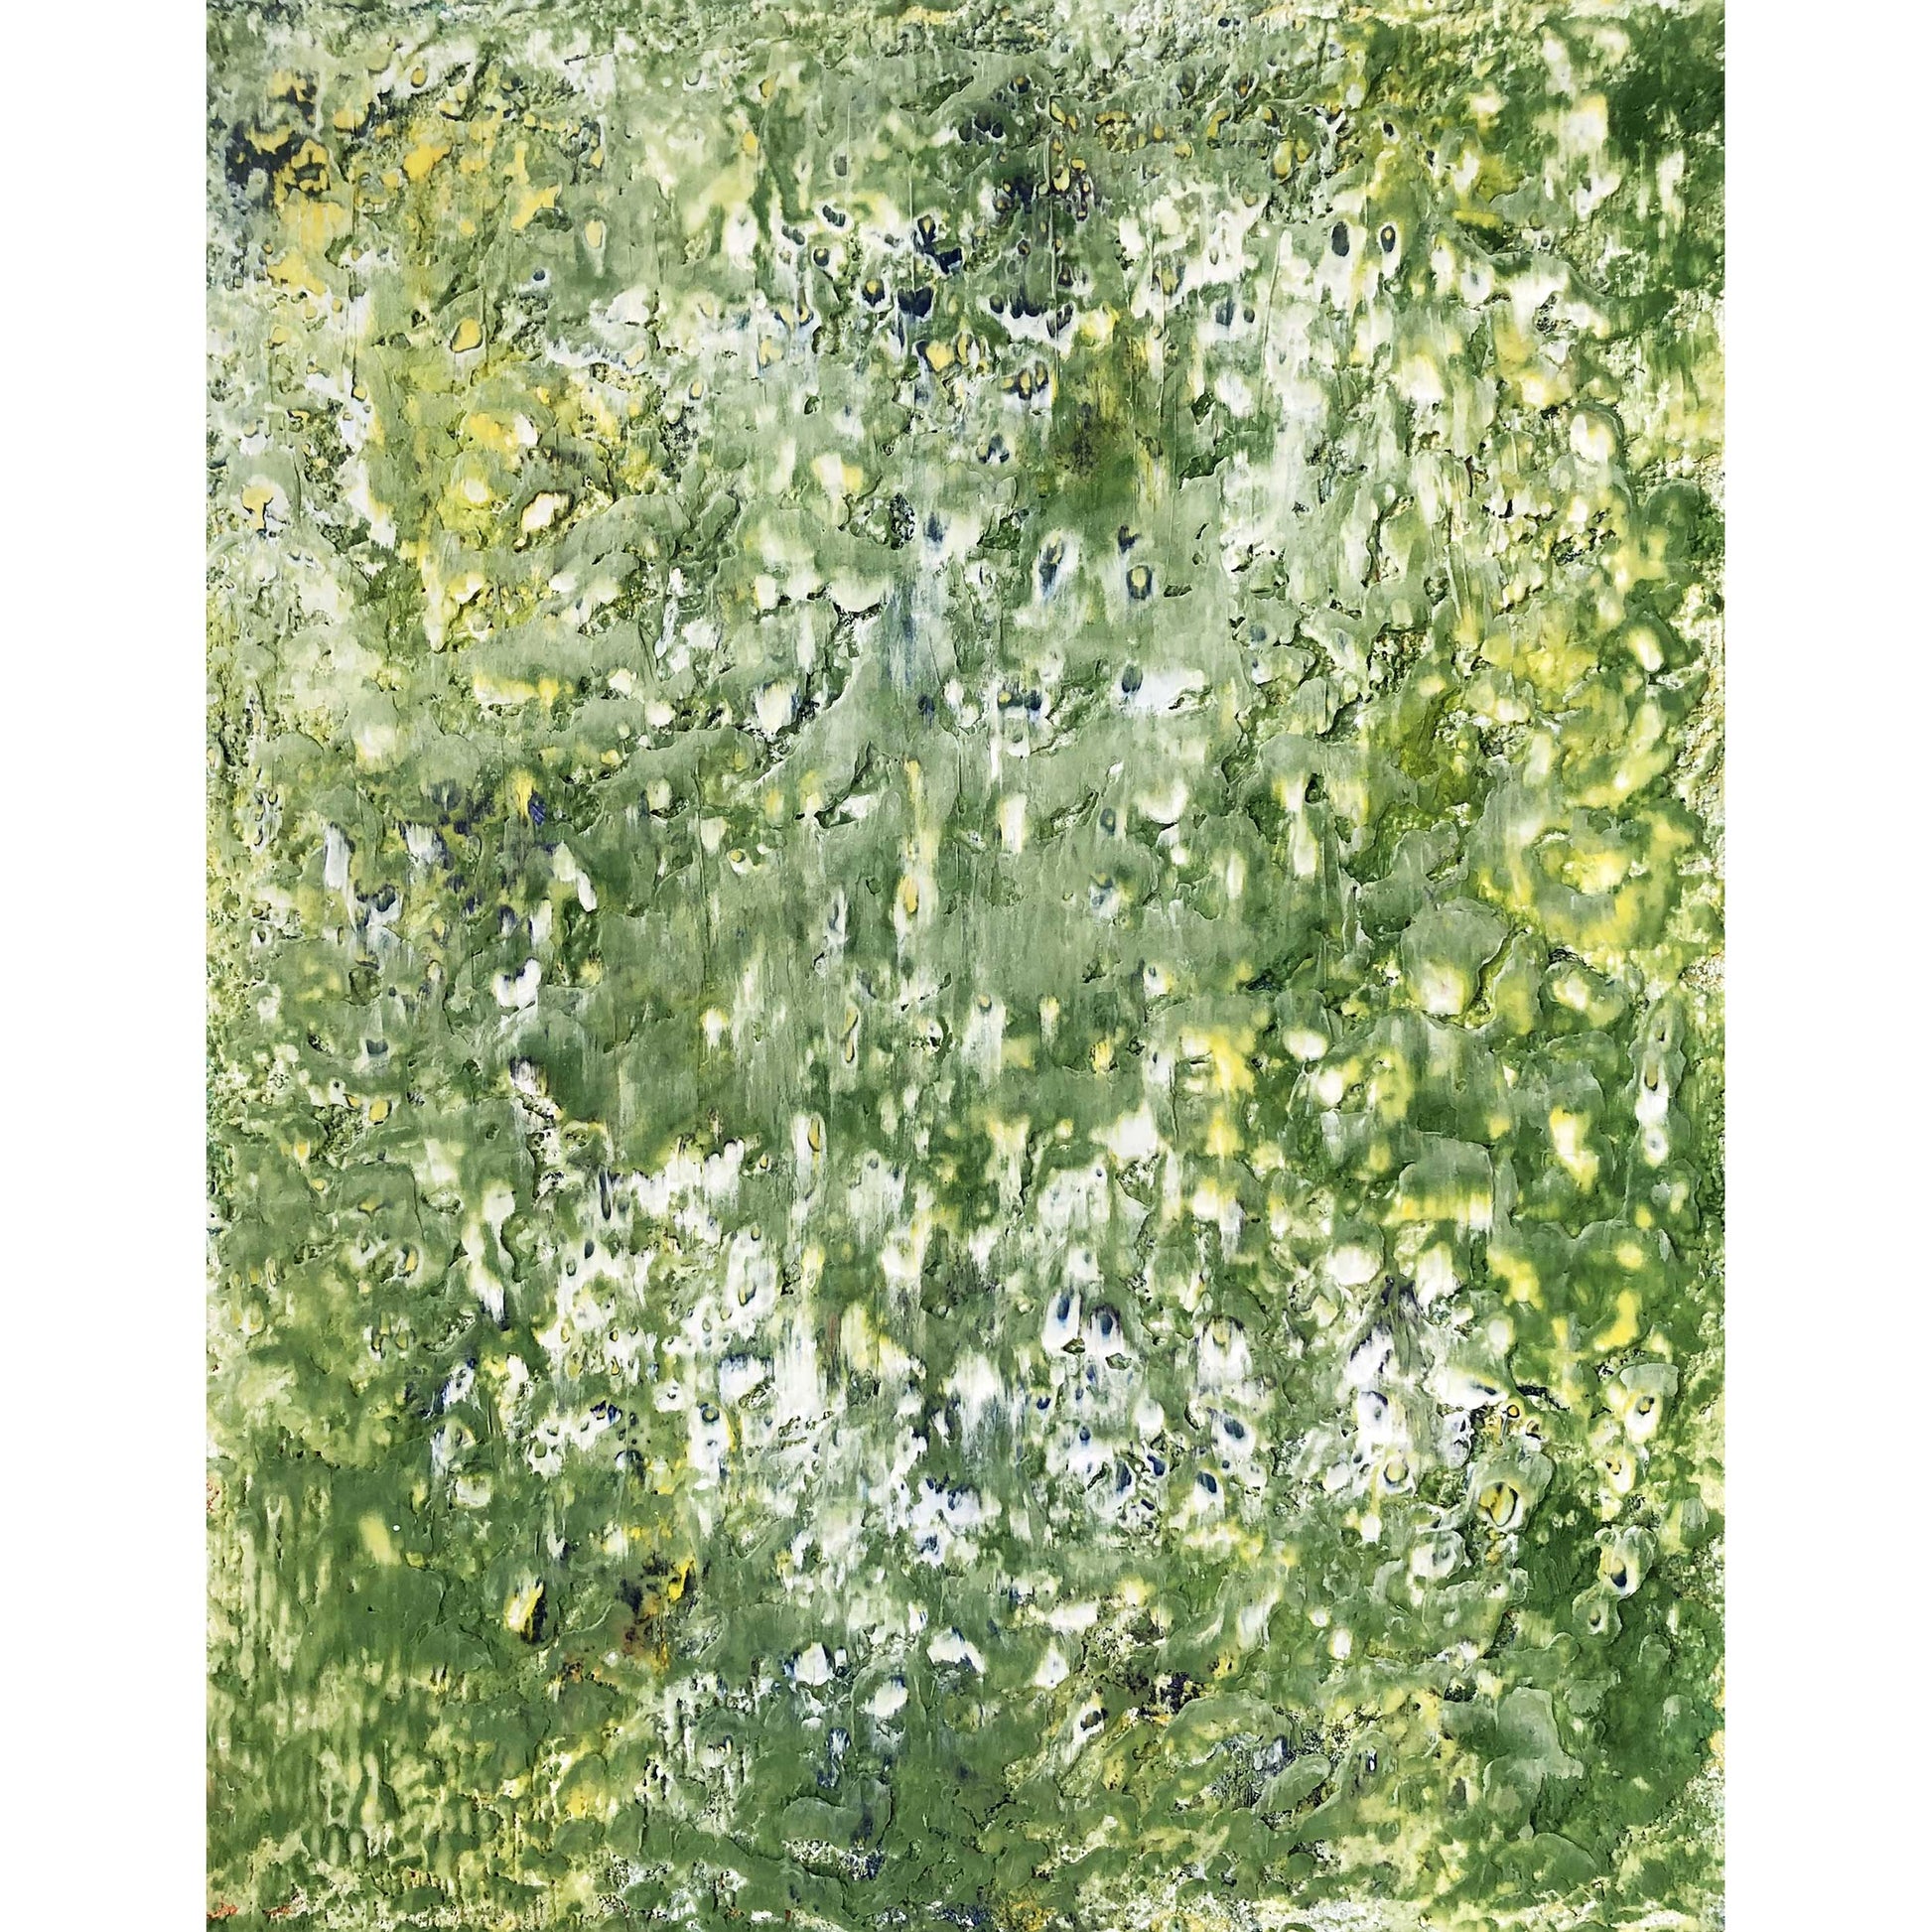 ENW-BF-001 "Big Forest" #1 (11x14x1.5) Original encaustic abstract painting by Chizu Omori Art